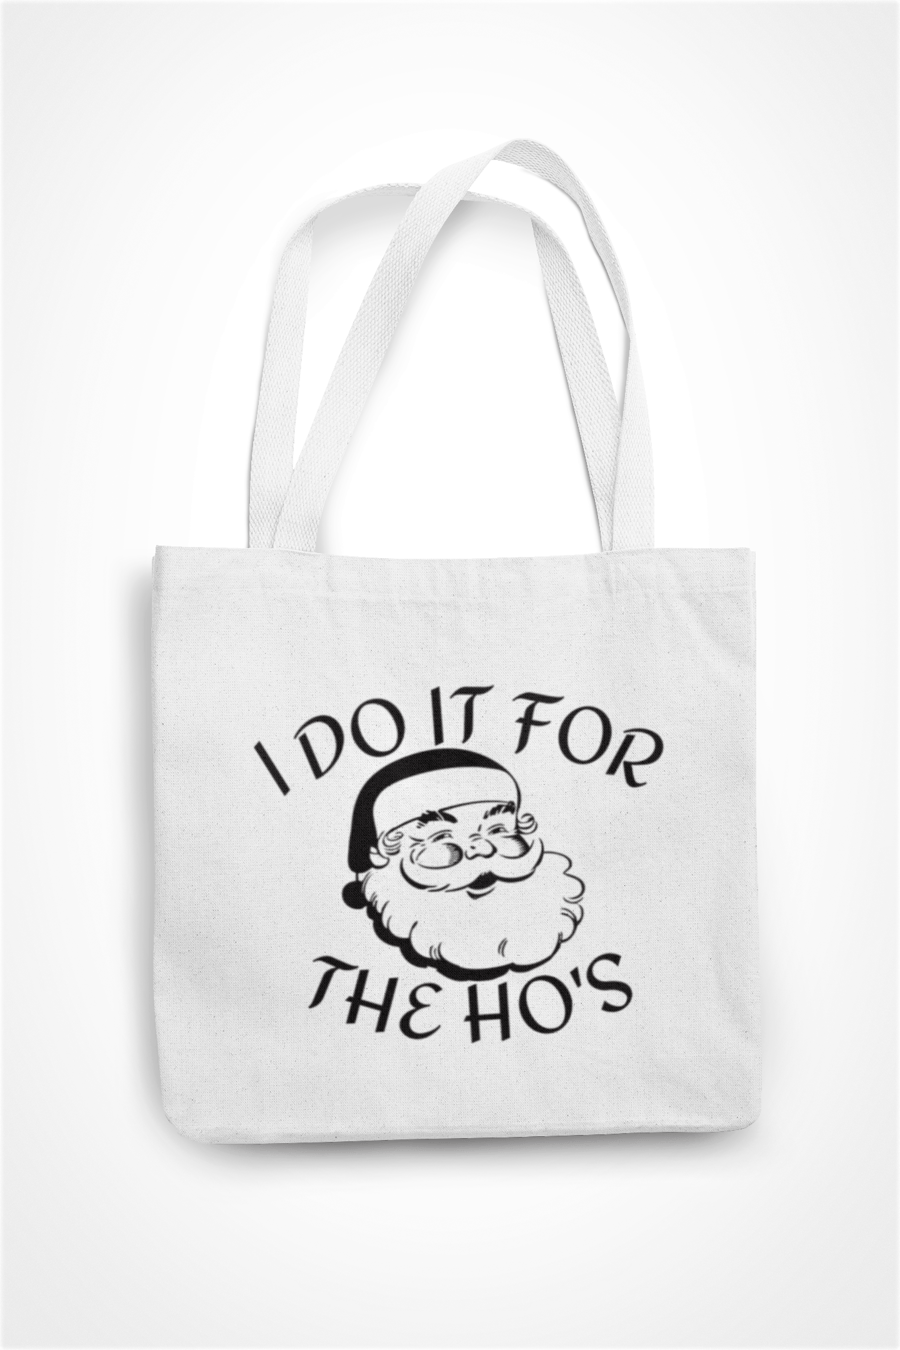 I Do It For The HO'S Novelty Christmas Tote Bag - Shopper Bag xmas Gift